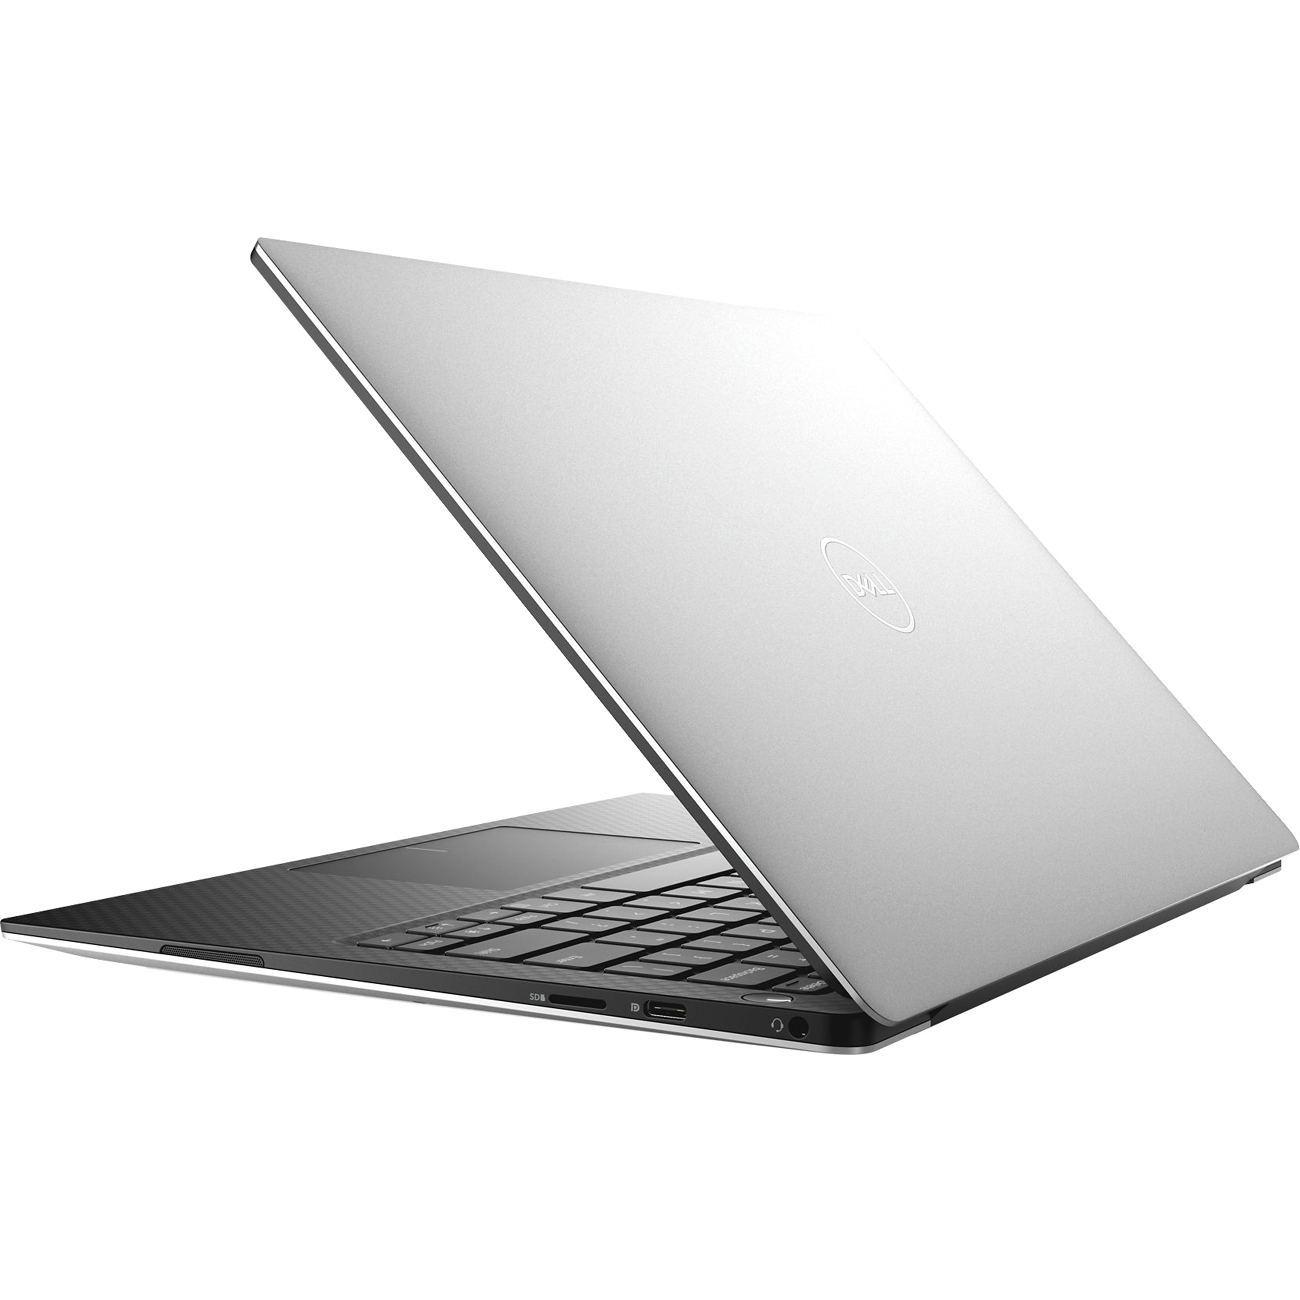 Dell XPS 13 9380 Touchscreen Laptop, 13.3", Intel Core i7-8565U, 8GB RAM, 256GB SSD, Intel UHD Graphics 620, XPS9380-7660SLV-PUS - image 3 of 6